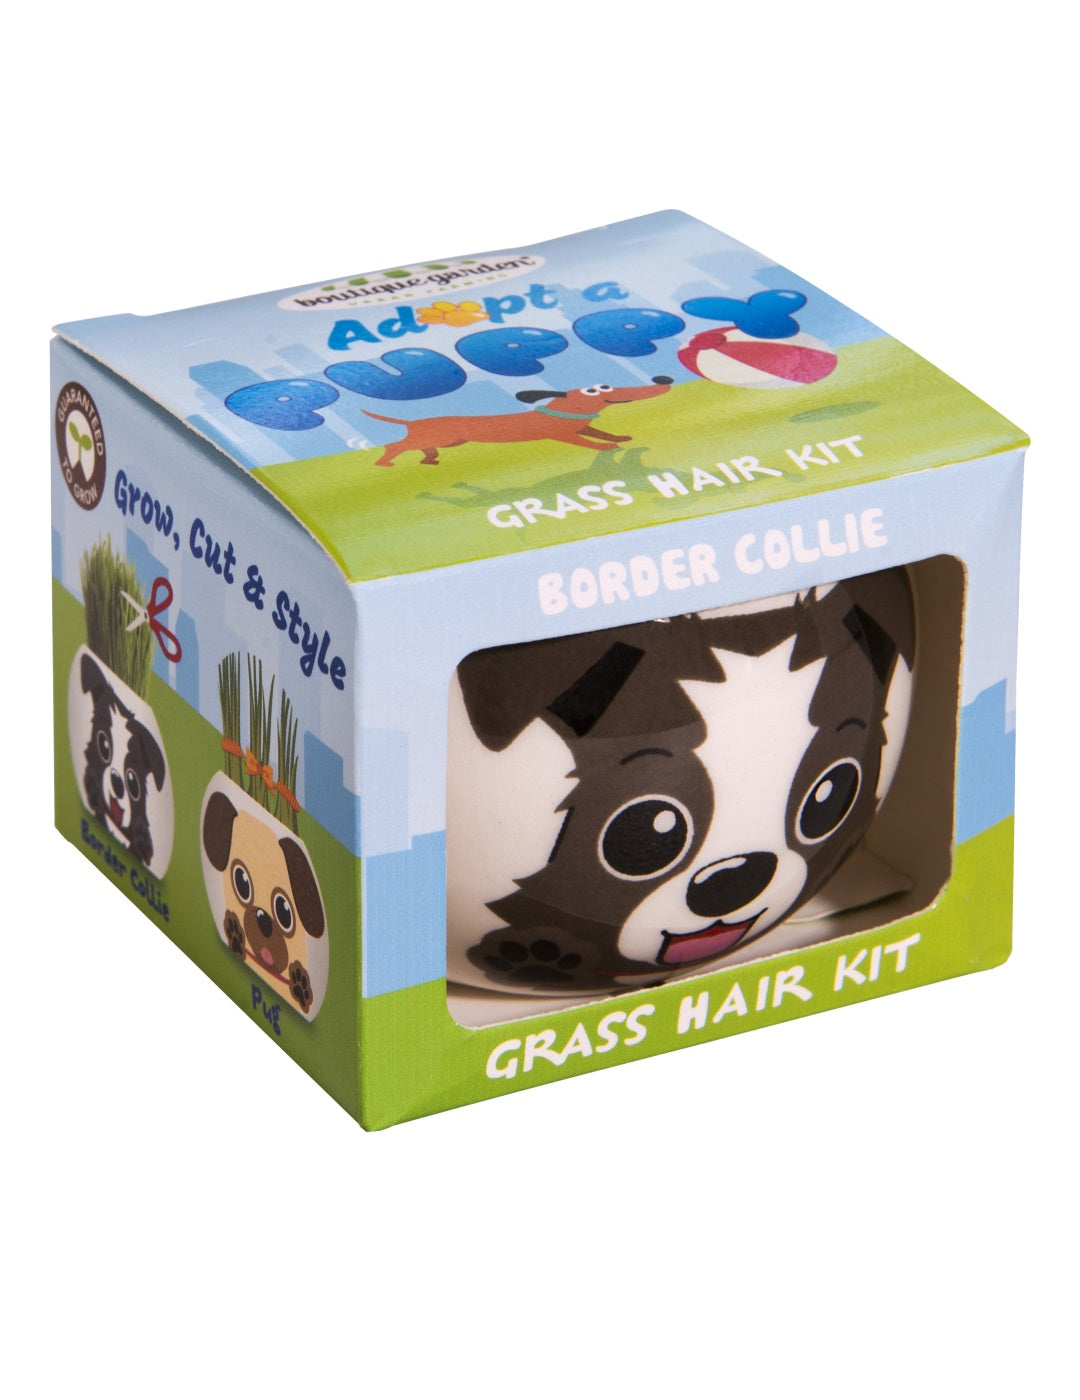 Grass Hair Kit - Puppies (Border Collie)